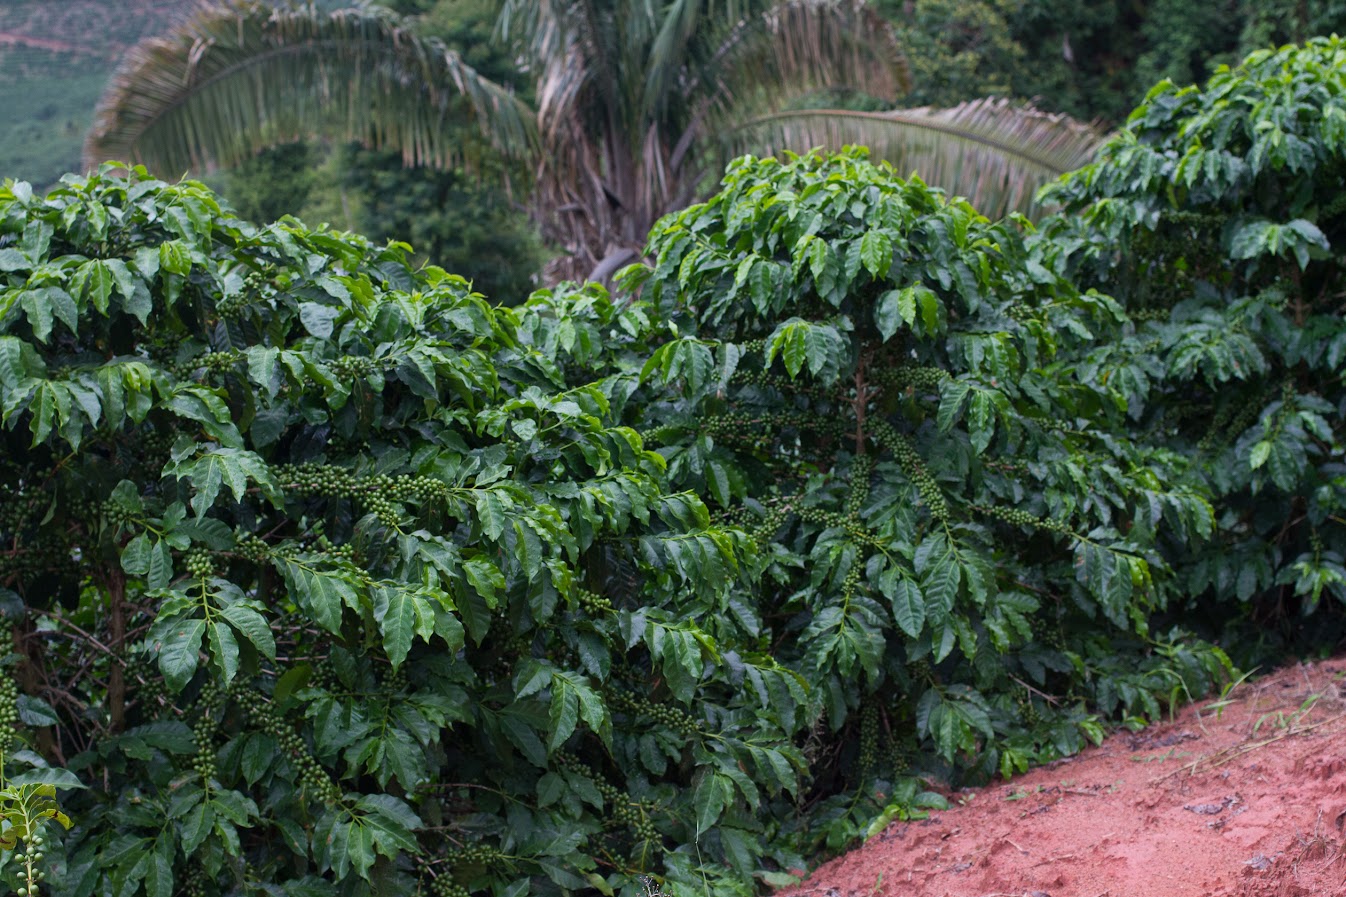 Arabica catuai coffee plants